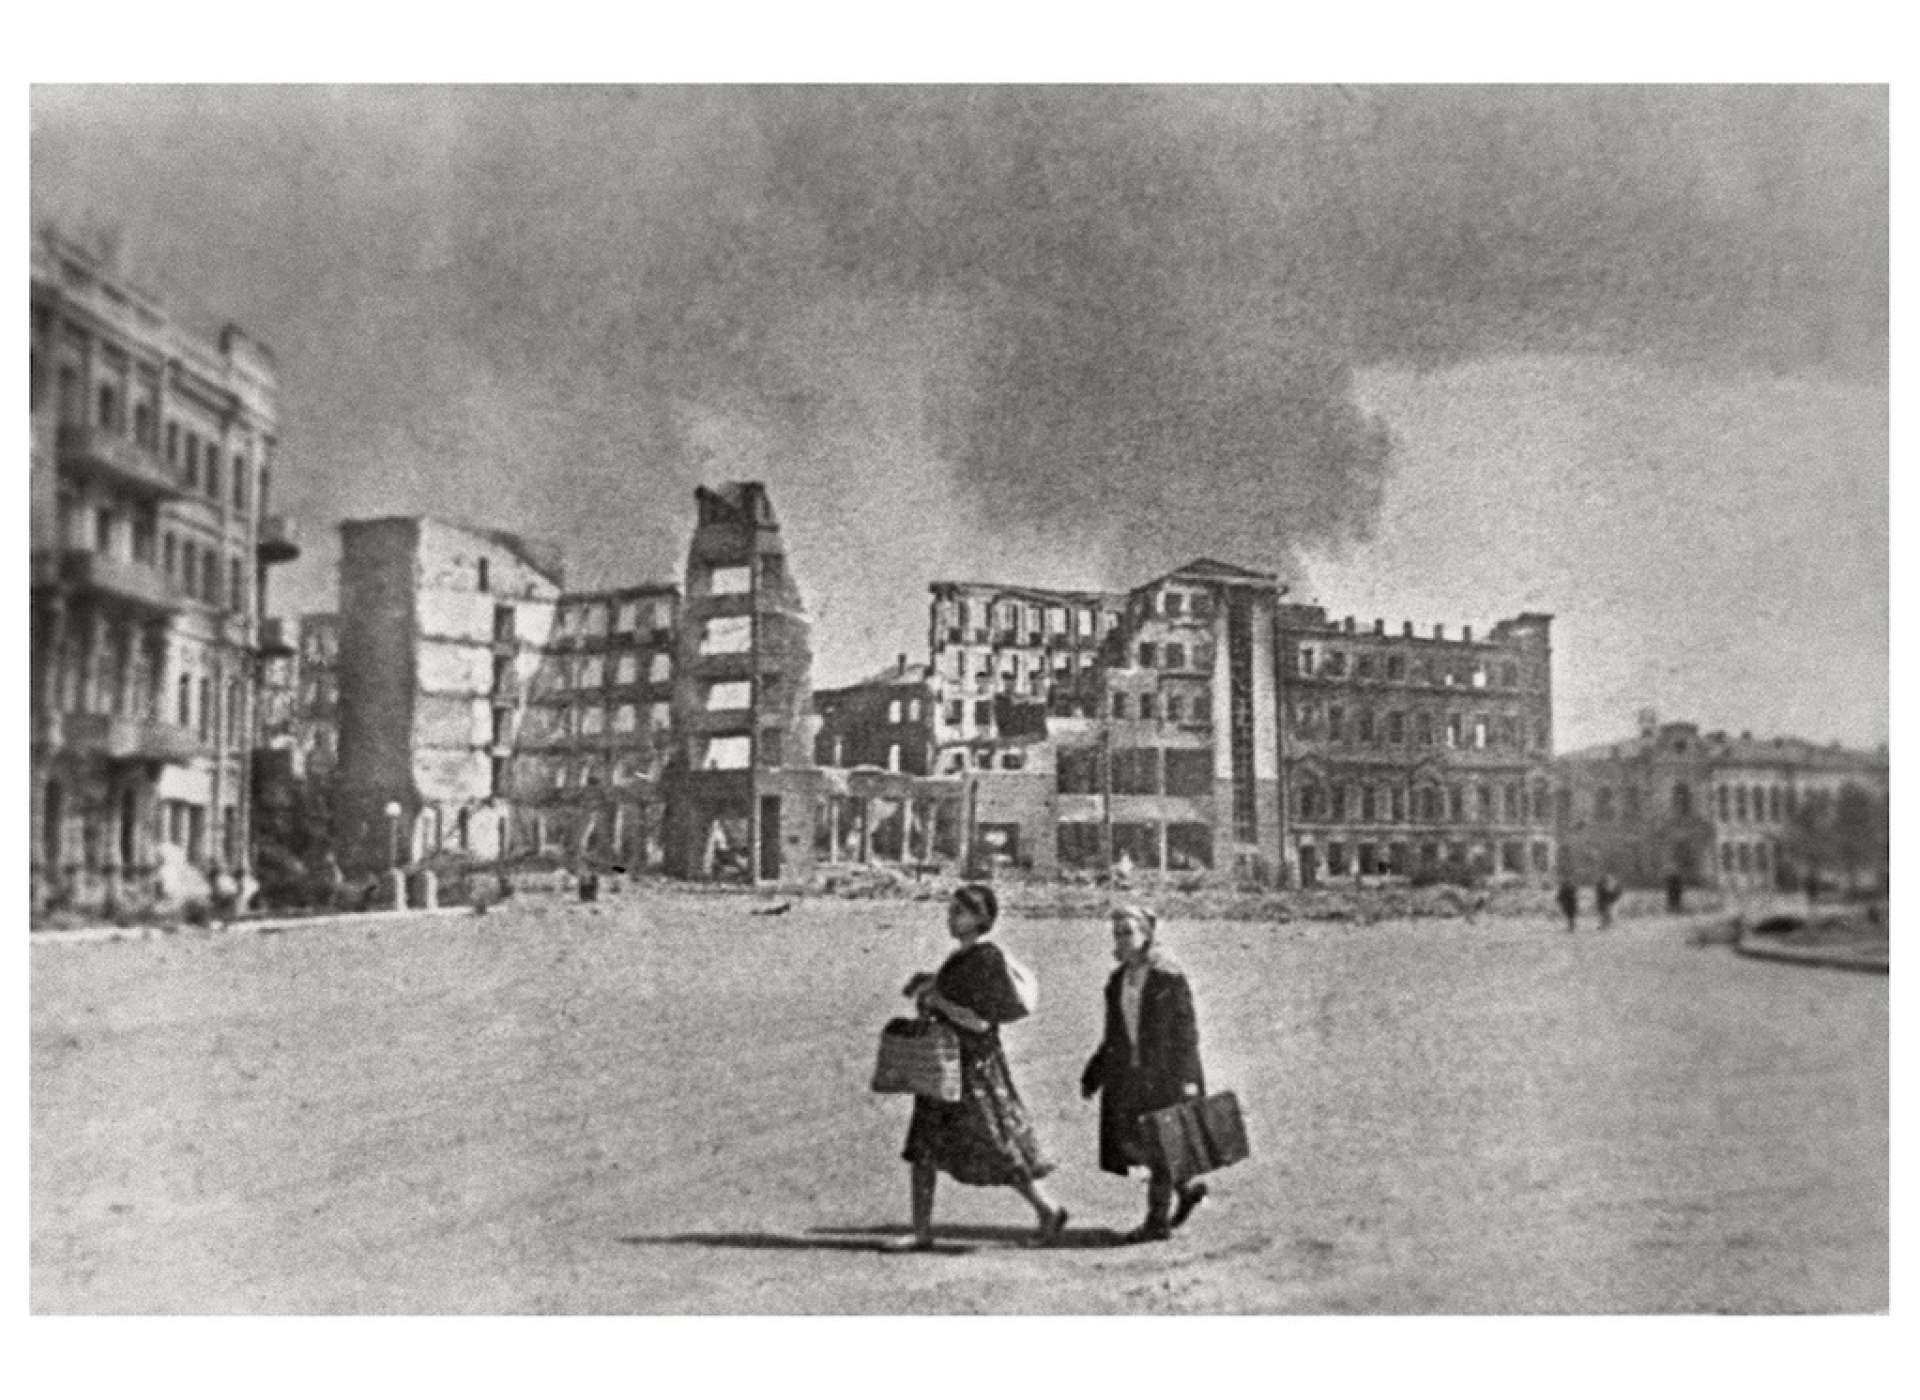 Stalingraders leaving the city, Emmanuil Evzerikhin, 1942. Source: PICRYL/Public domain